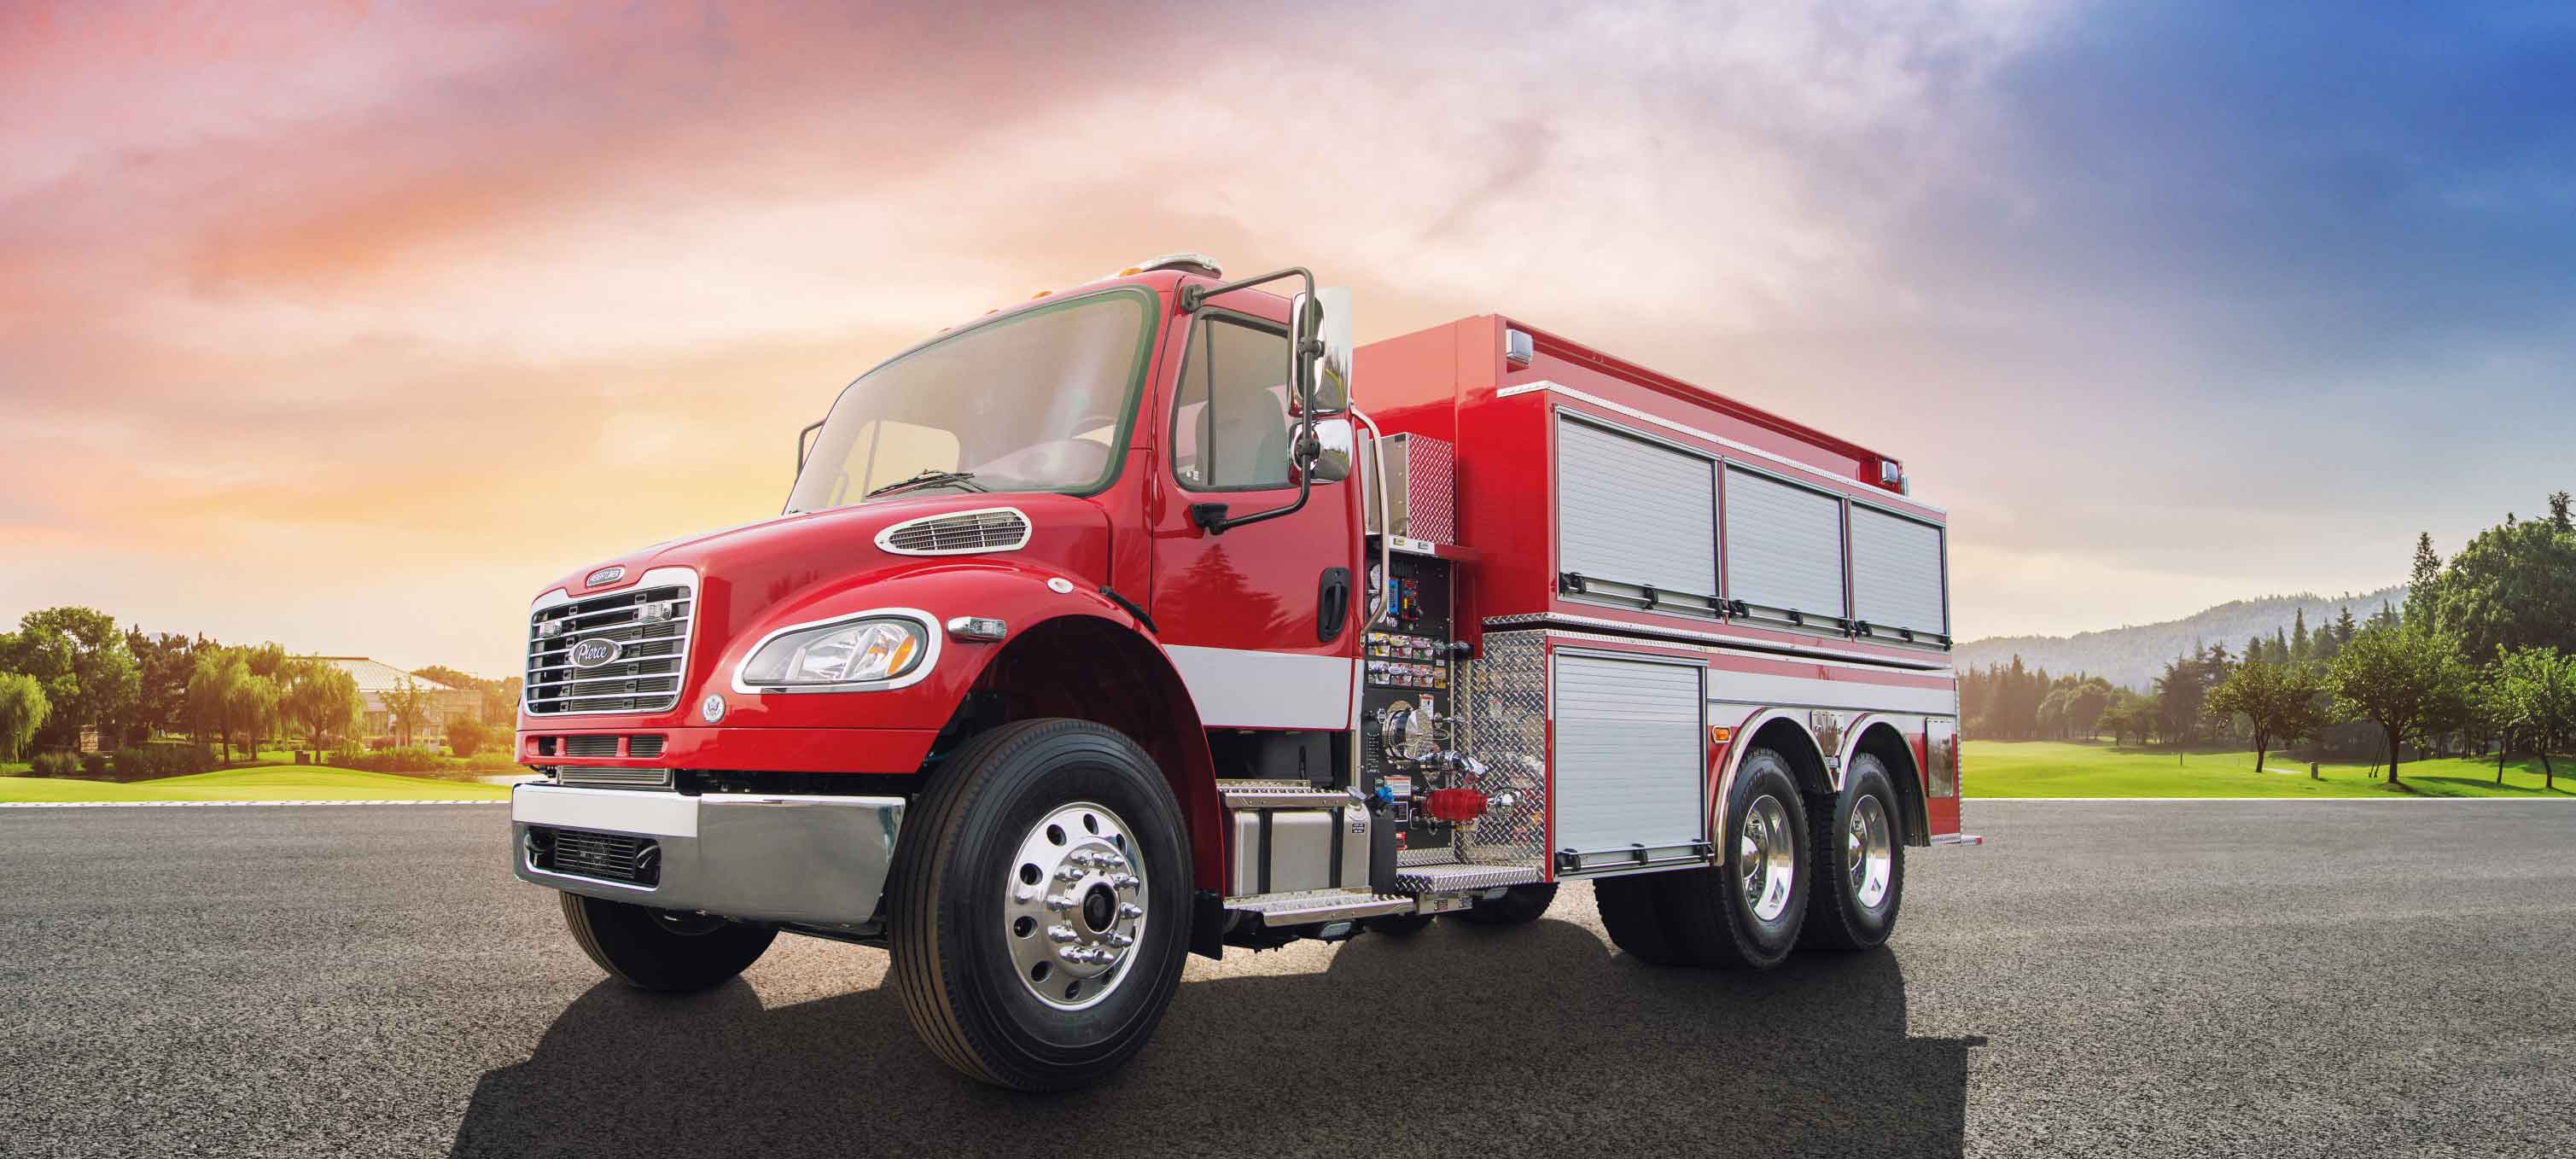 Pierce BX™ Tanker Fire Truck